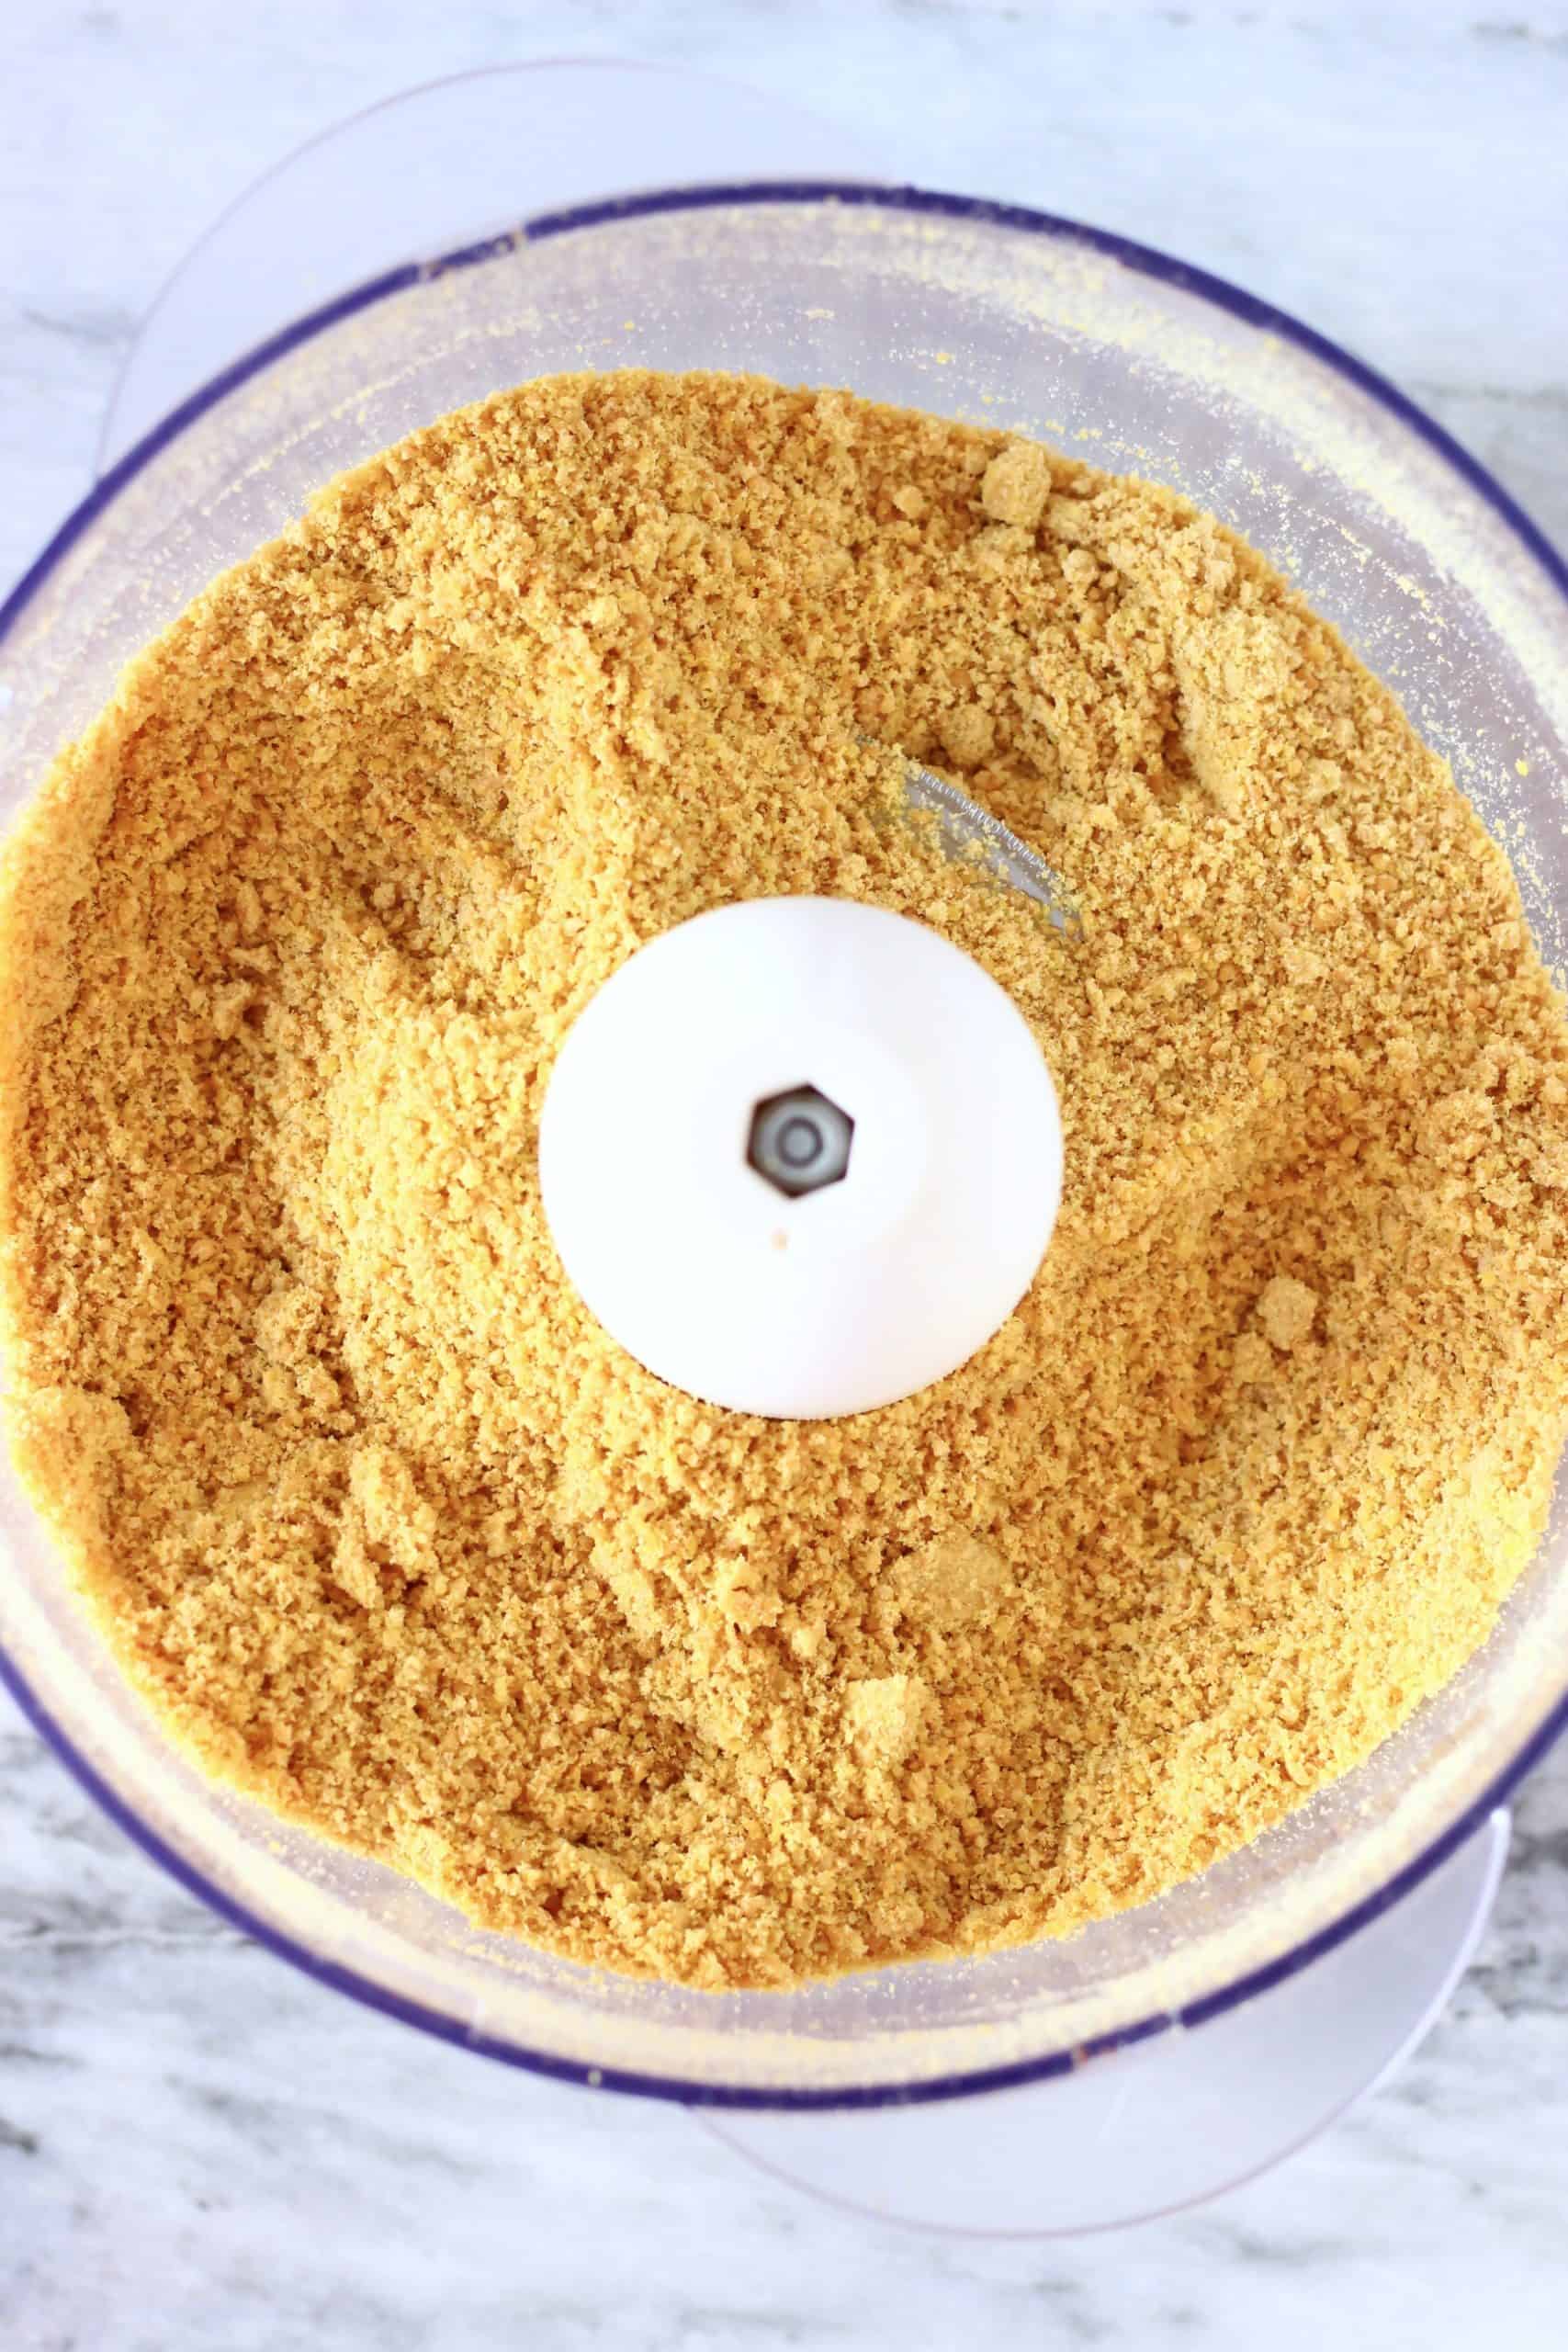 Flaxseed powder in a food processor